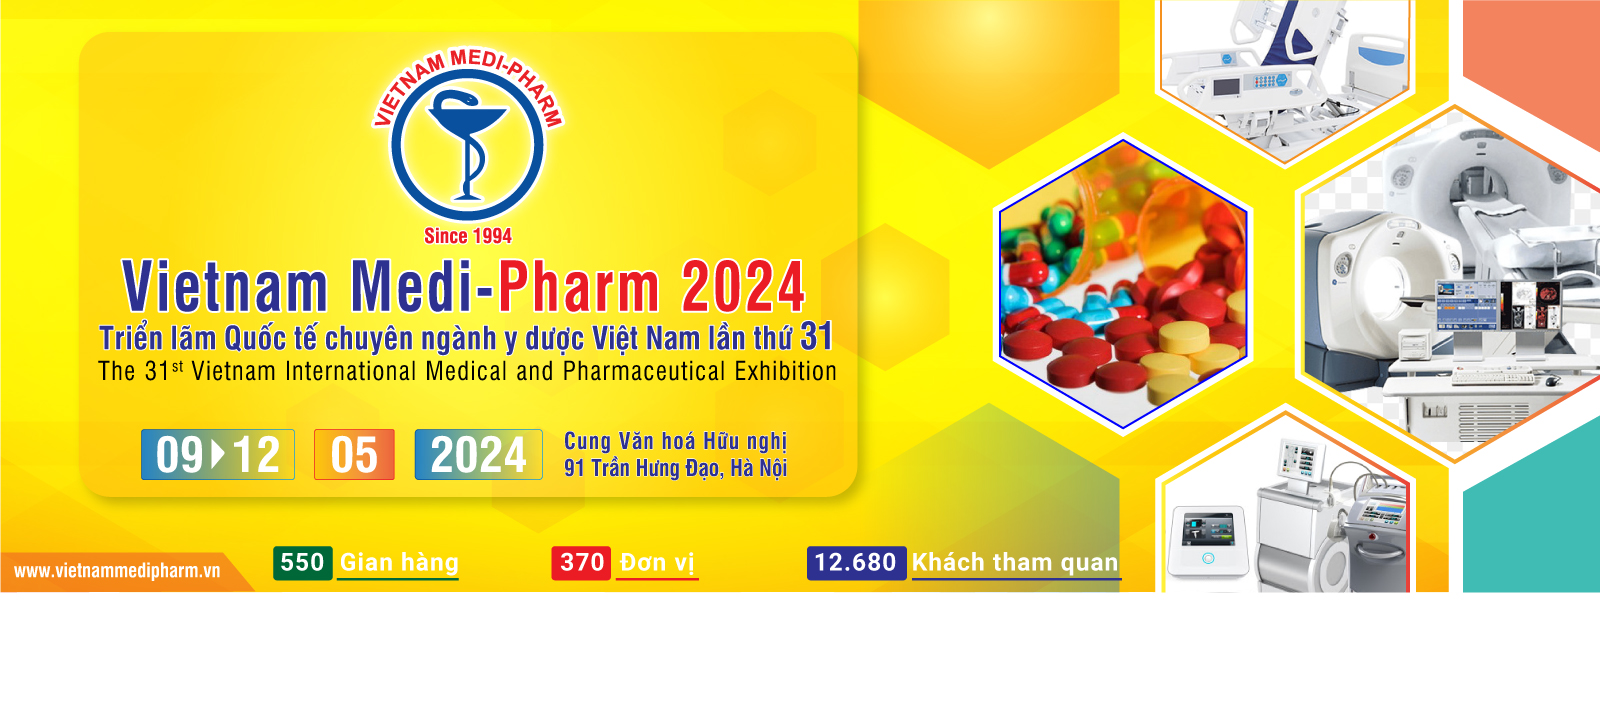 VIETNAM MEDIPHARM 2024 The 31th annually Vietnam International